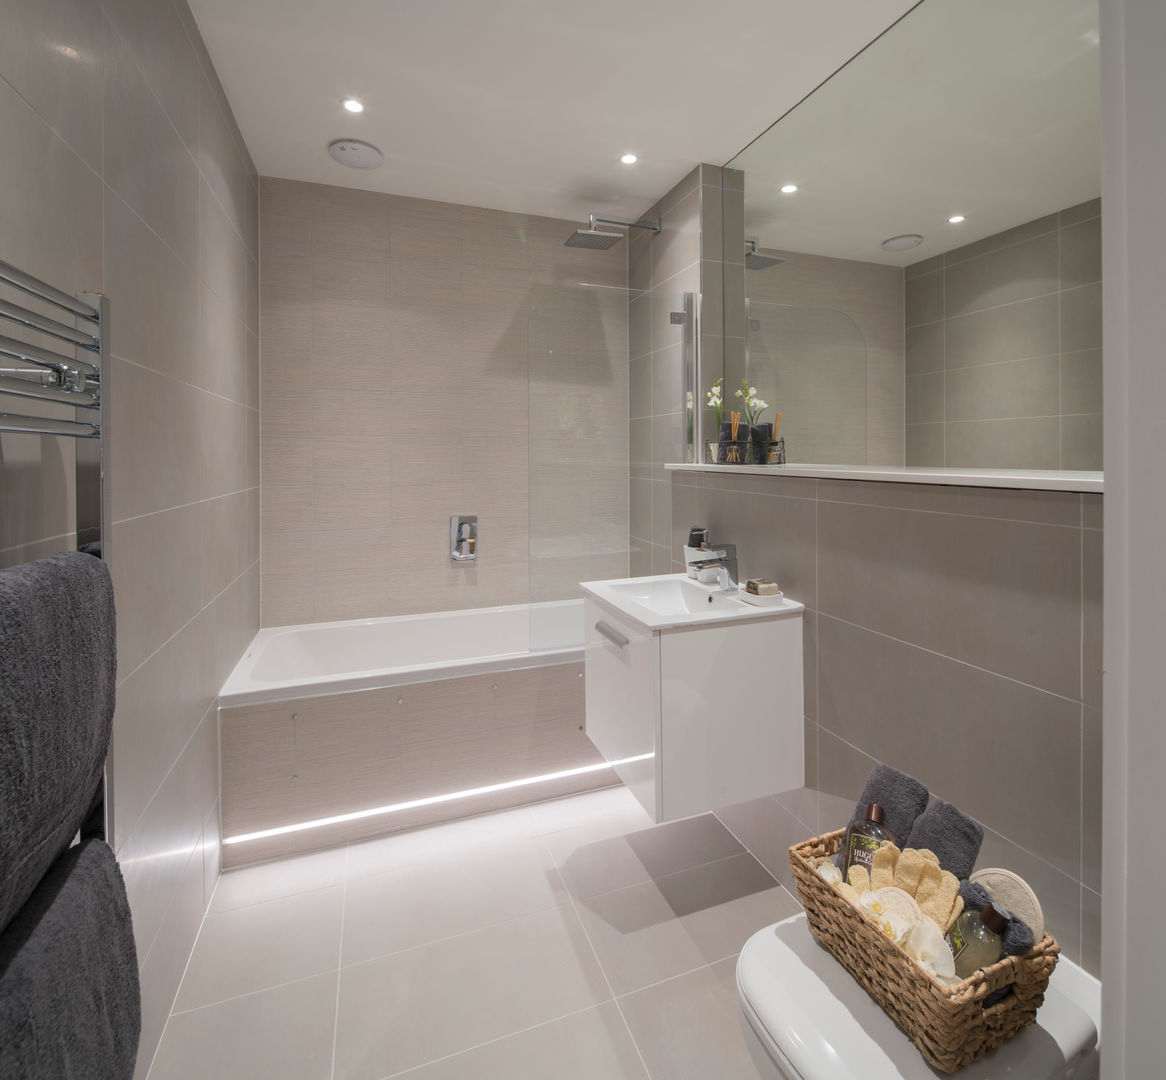 Station Rd, New Barnet Jigsaw Interior Architecture & Design Modern Banyo luxury,bathroom,tiles,mirror,bronze,london,show home